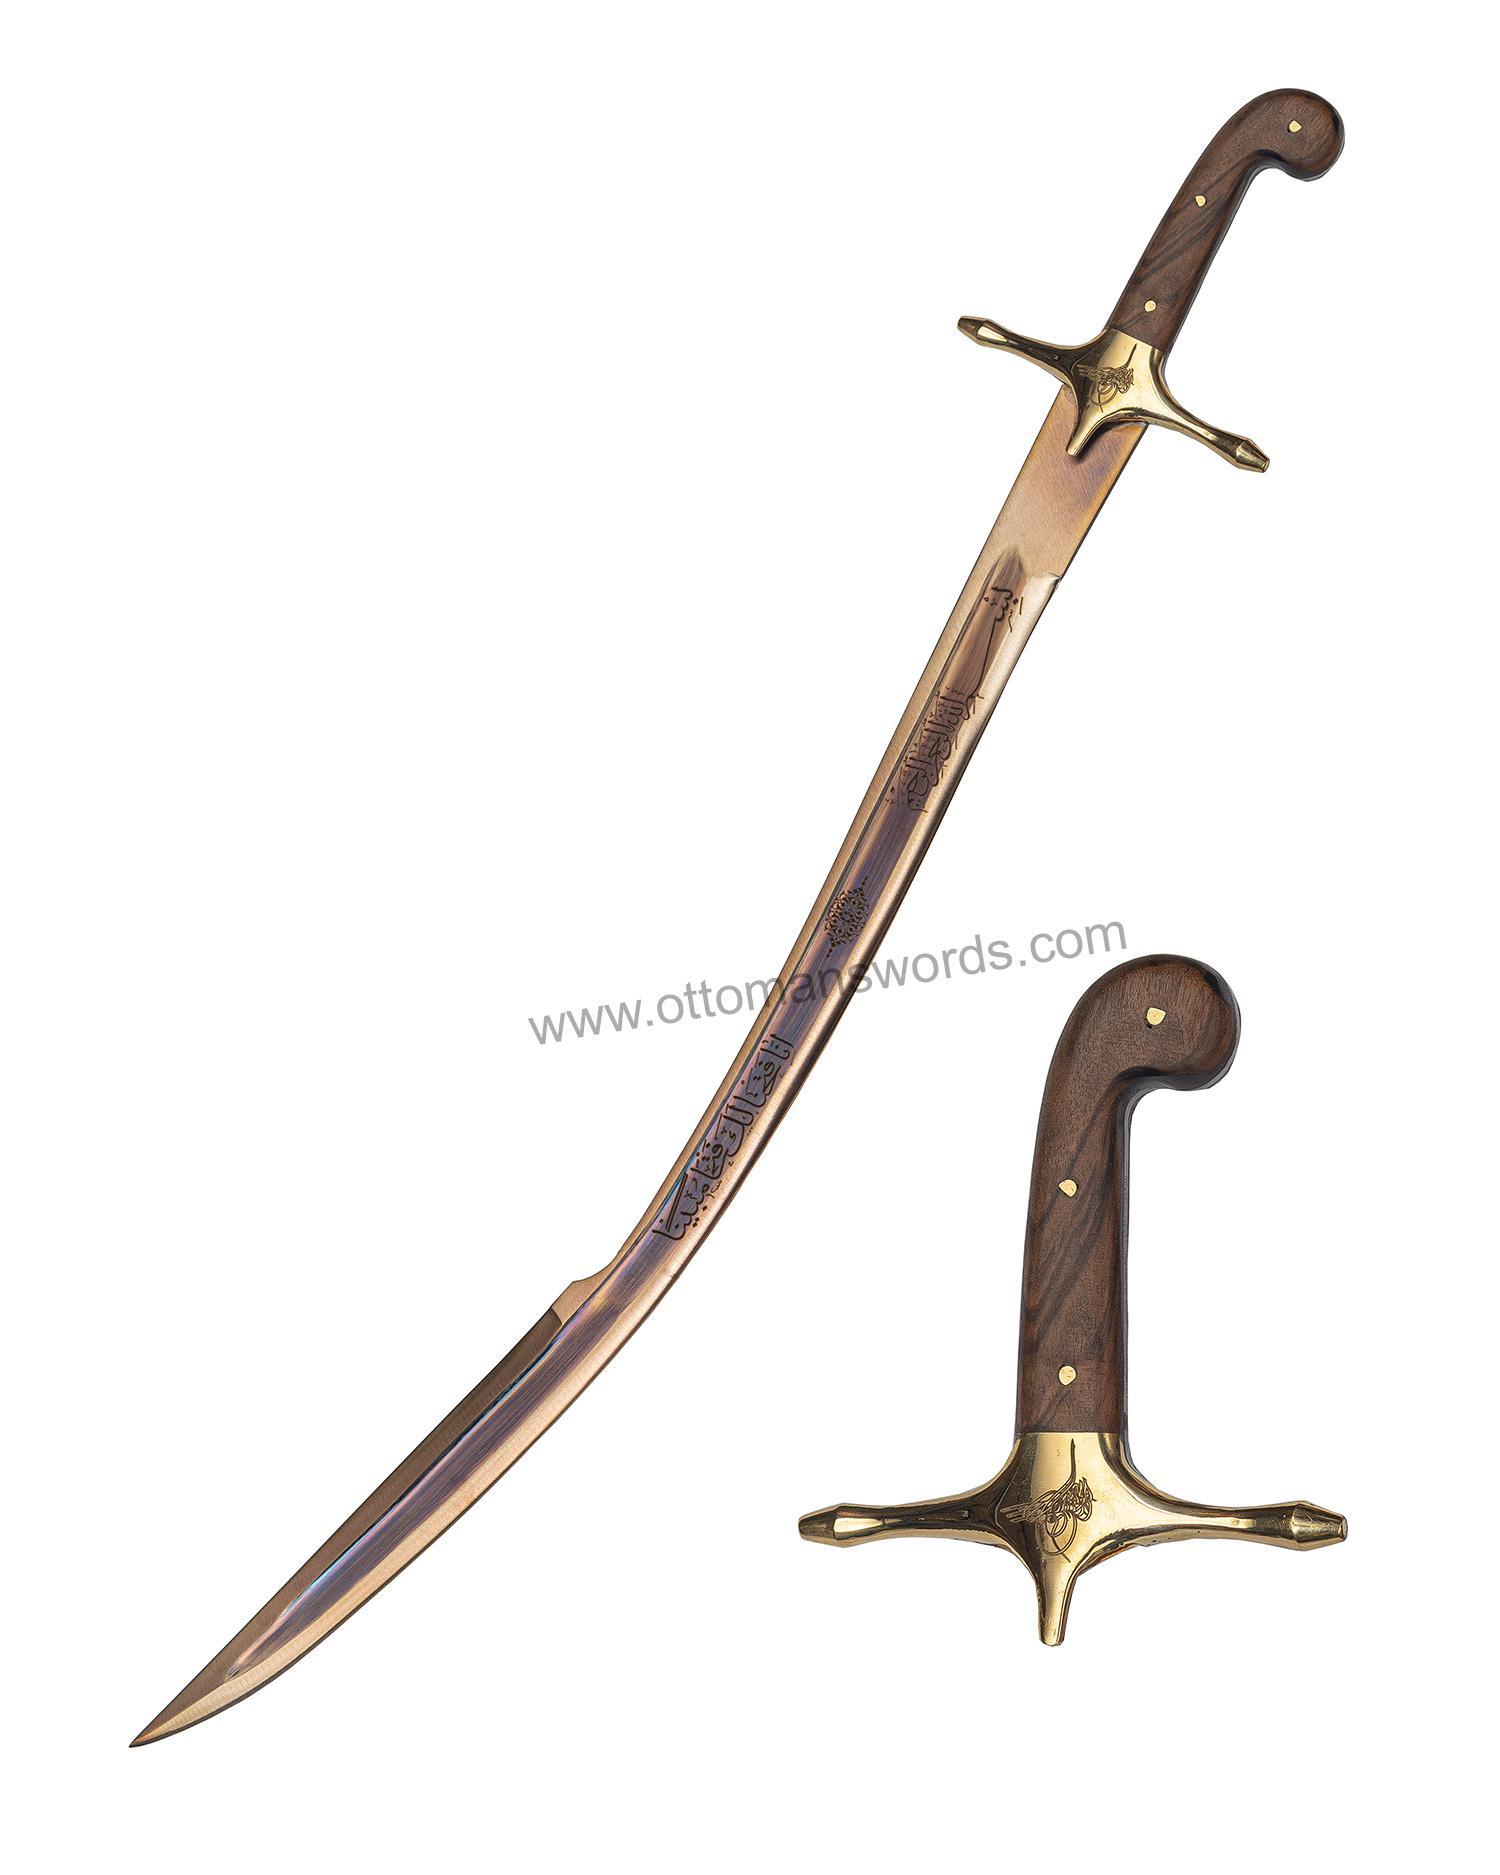 Ottoman Curved Kilij Sword